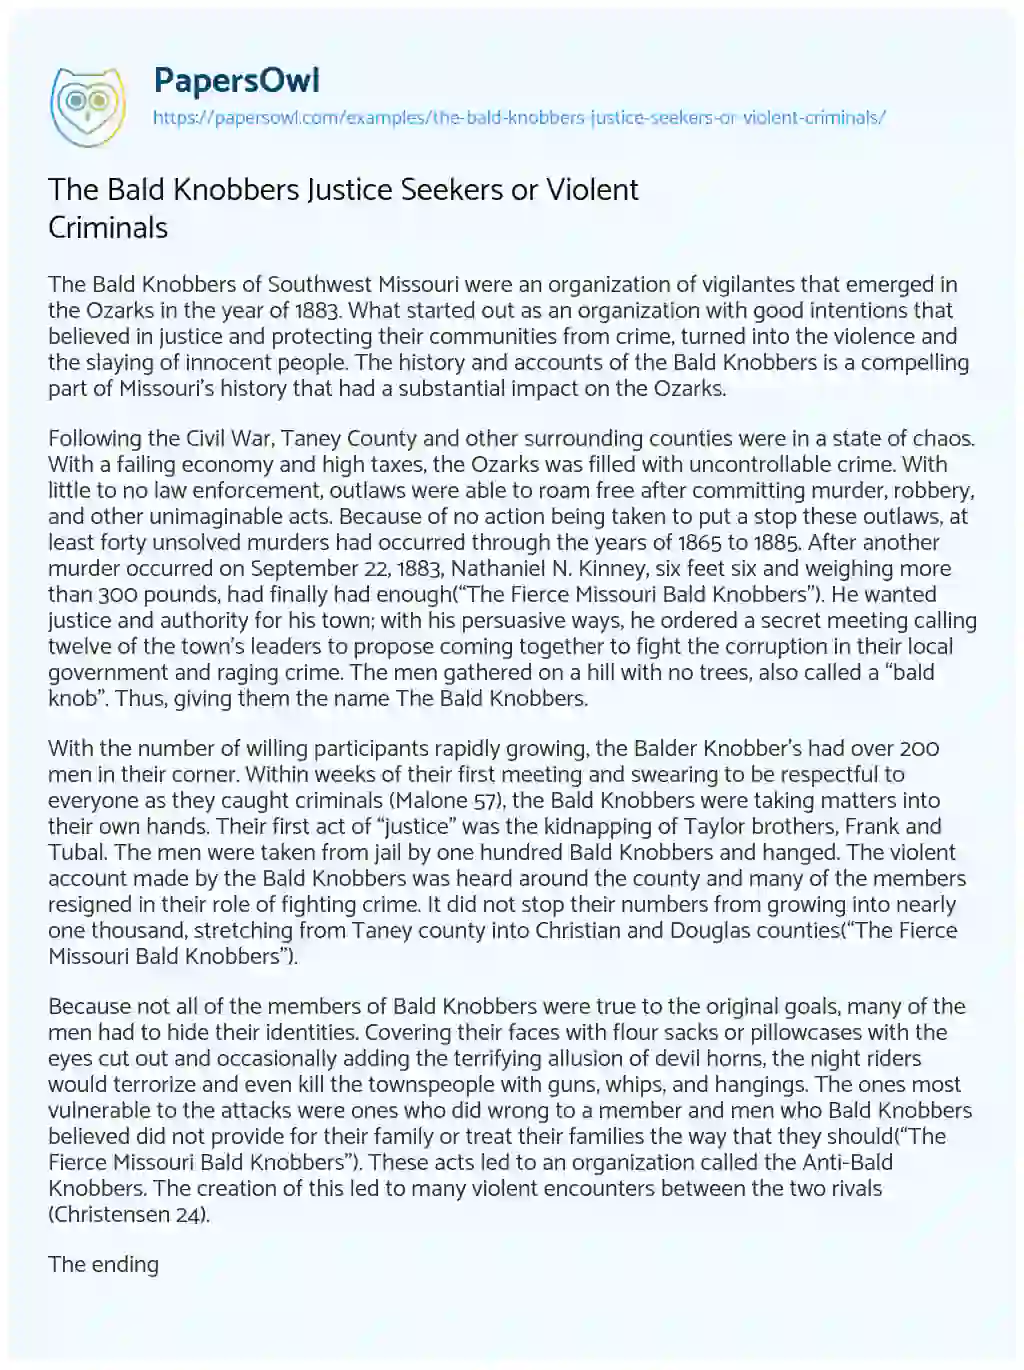 Essay on The Bald Knobbers Justice Seekers or Violent Criminals